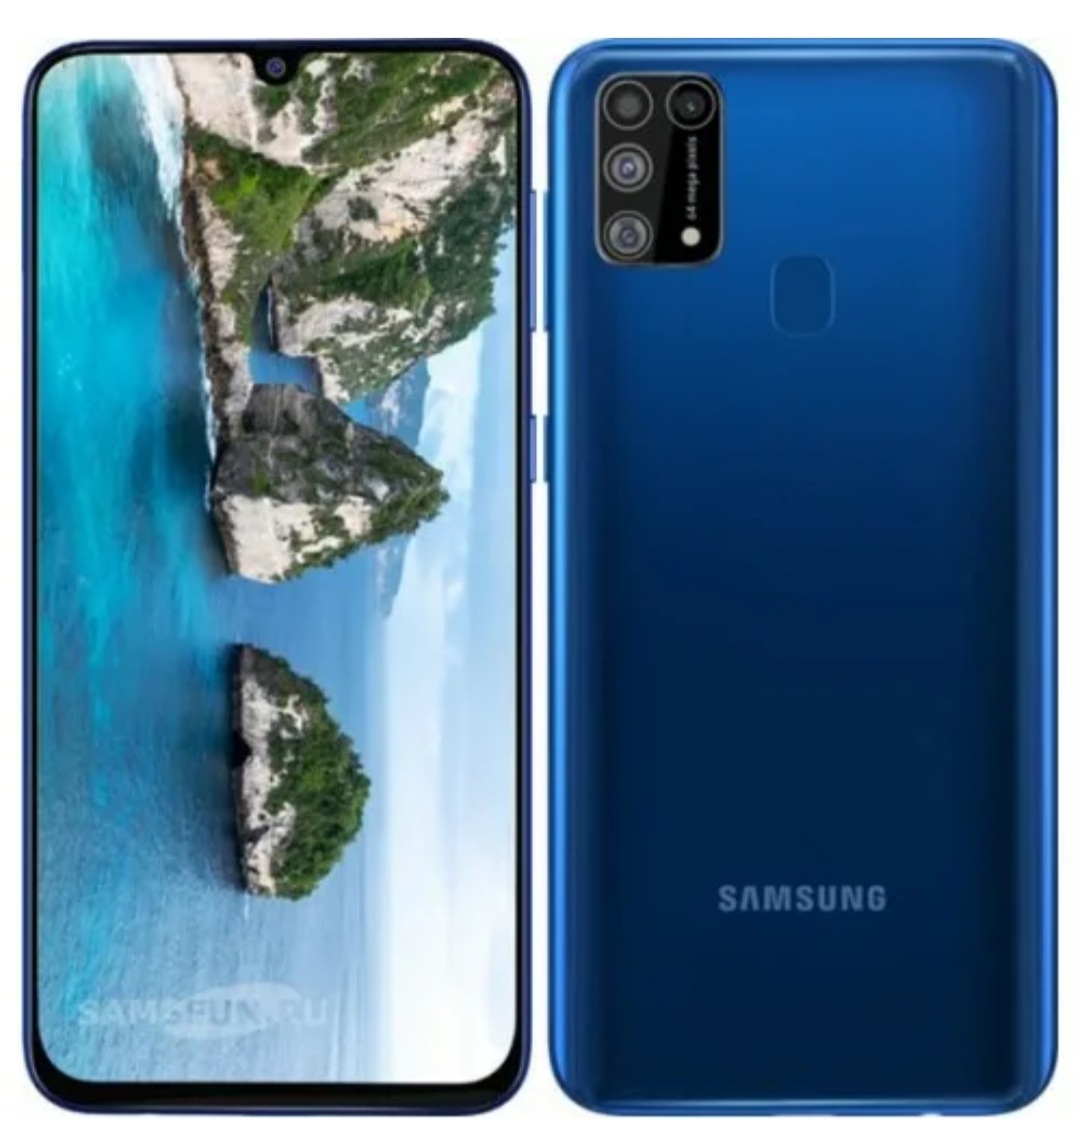 Самсунг галакси м цены. Samsung Galaxy m31 128gb. Samsung Galaxy m31 6/128 GB. Samsung Galaxy m31 Samsung. Samsung Galaxy m 31 128.